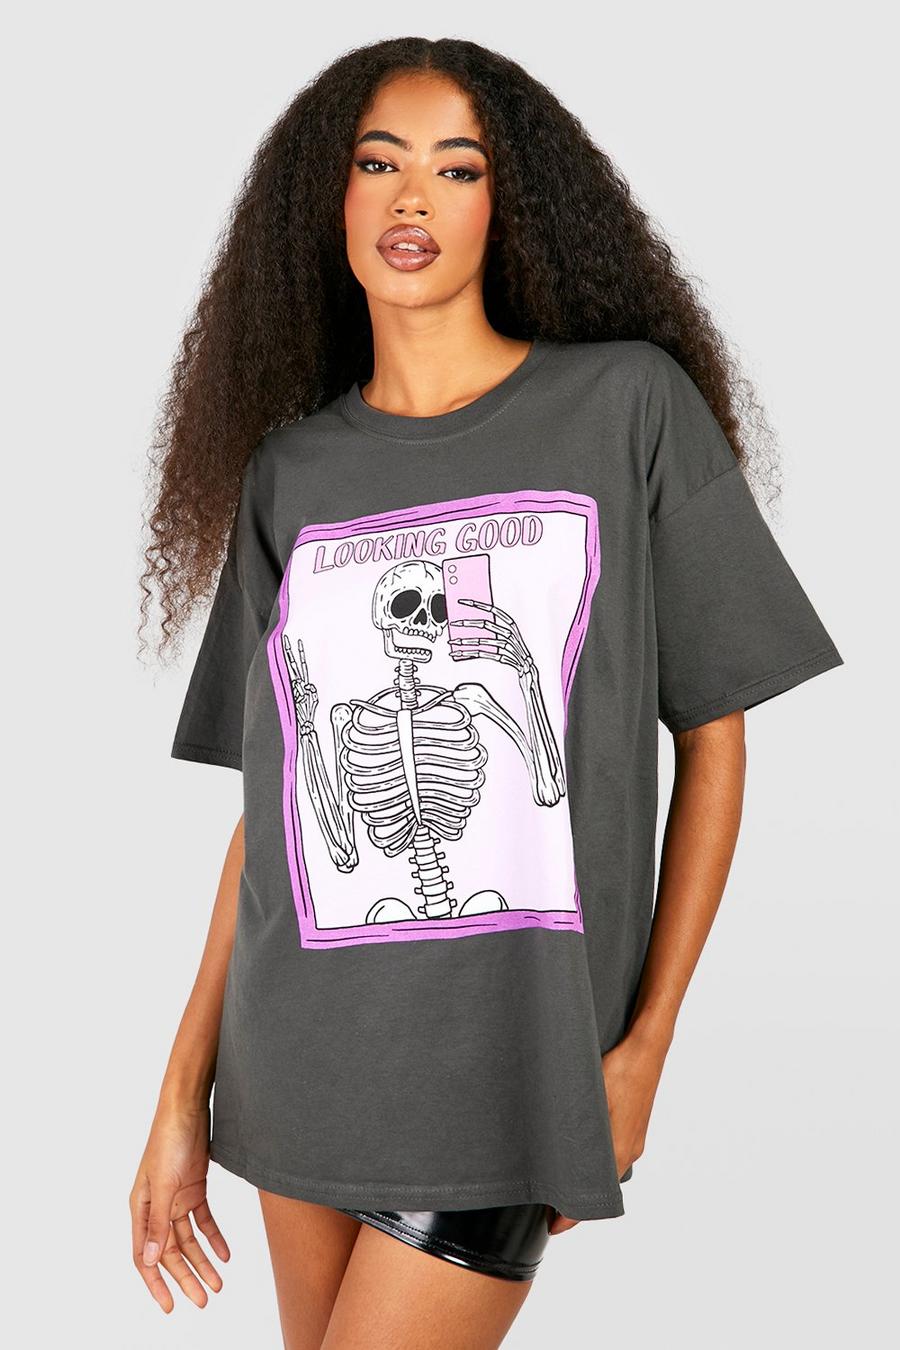 Oversized Halloween T-Shirt